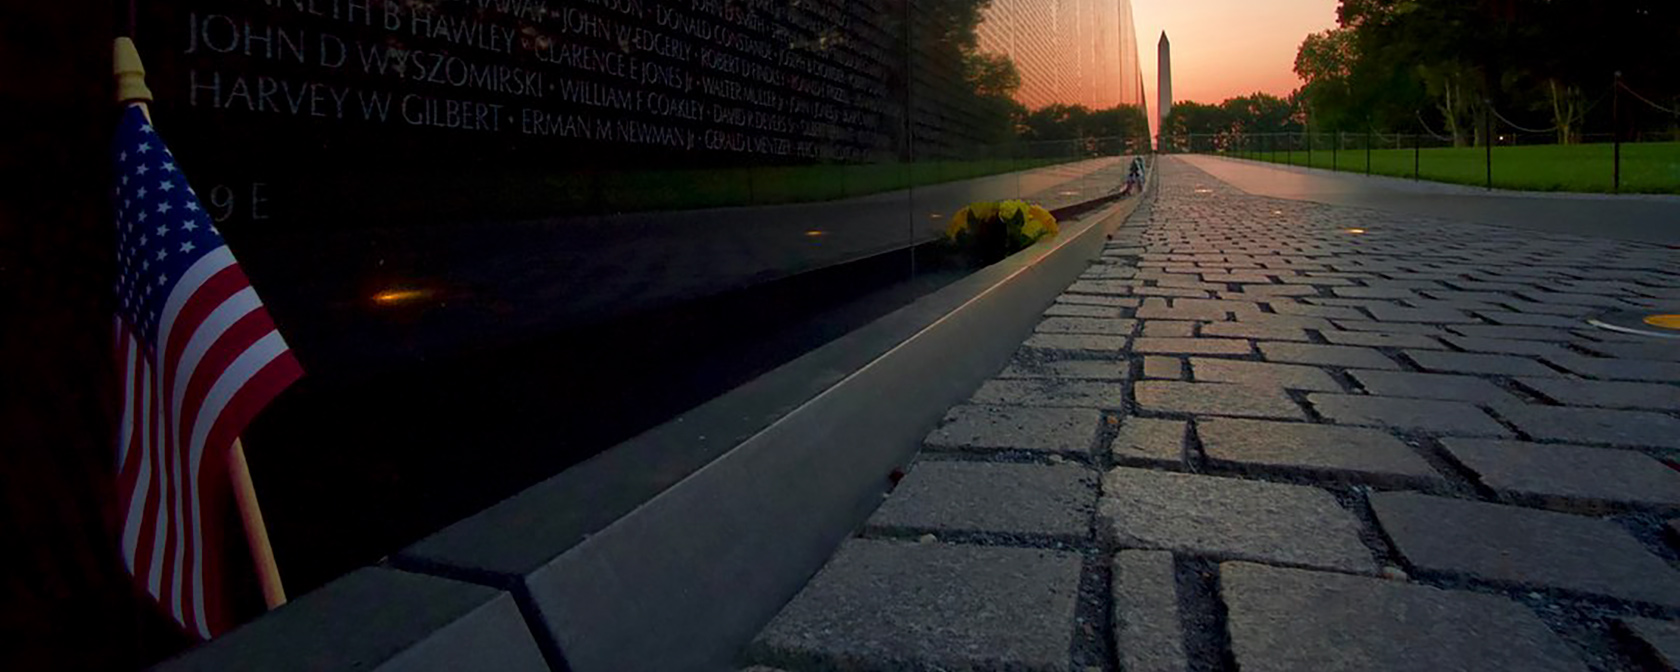 Vietnam Veterans Memorial at sunrise